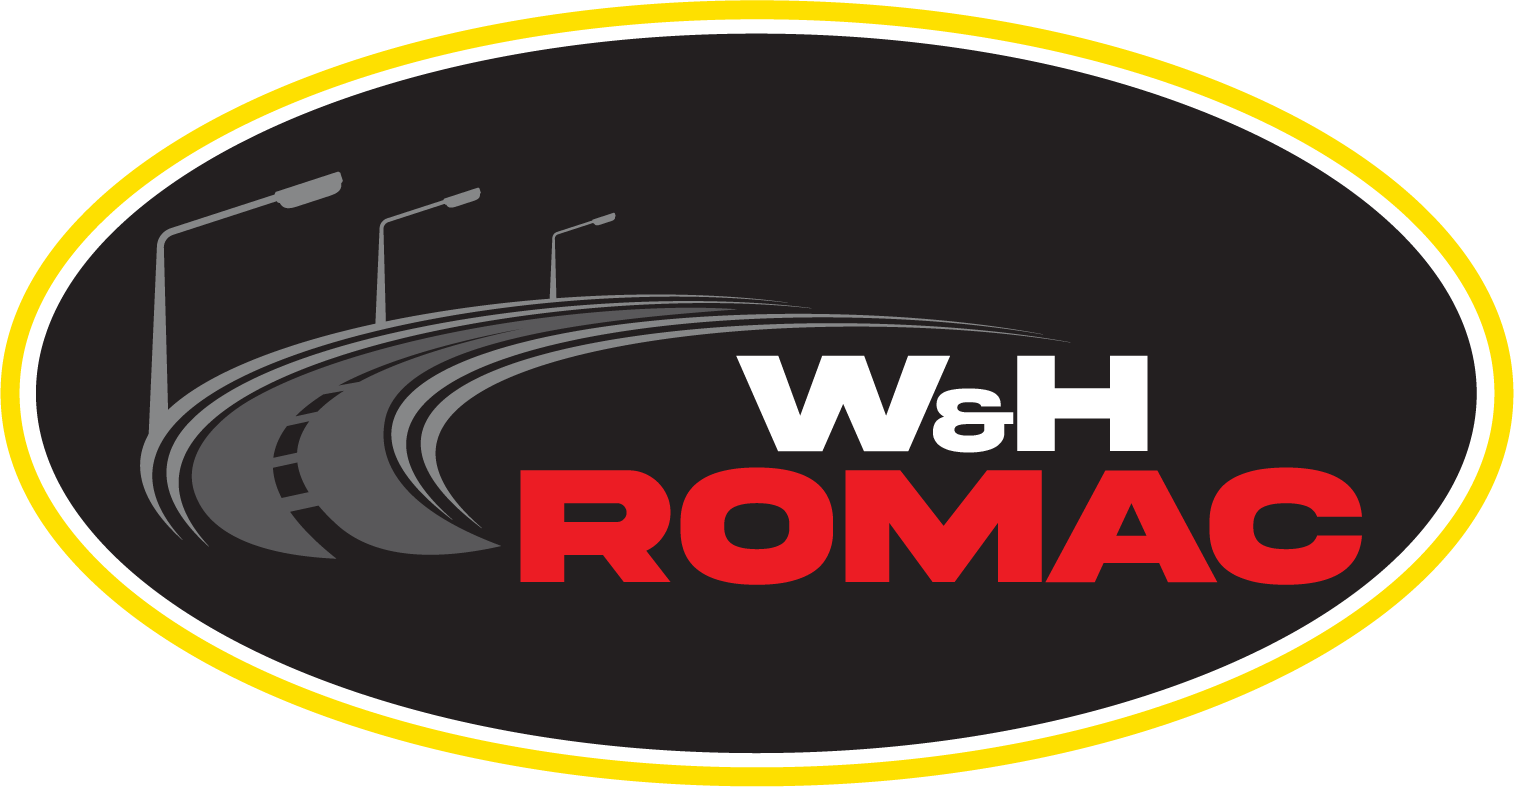 W&H Romac Ltd